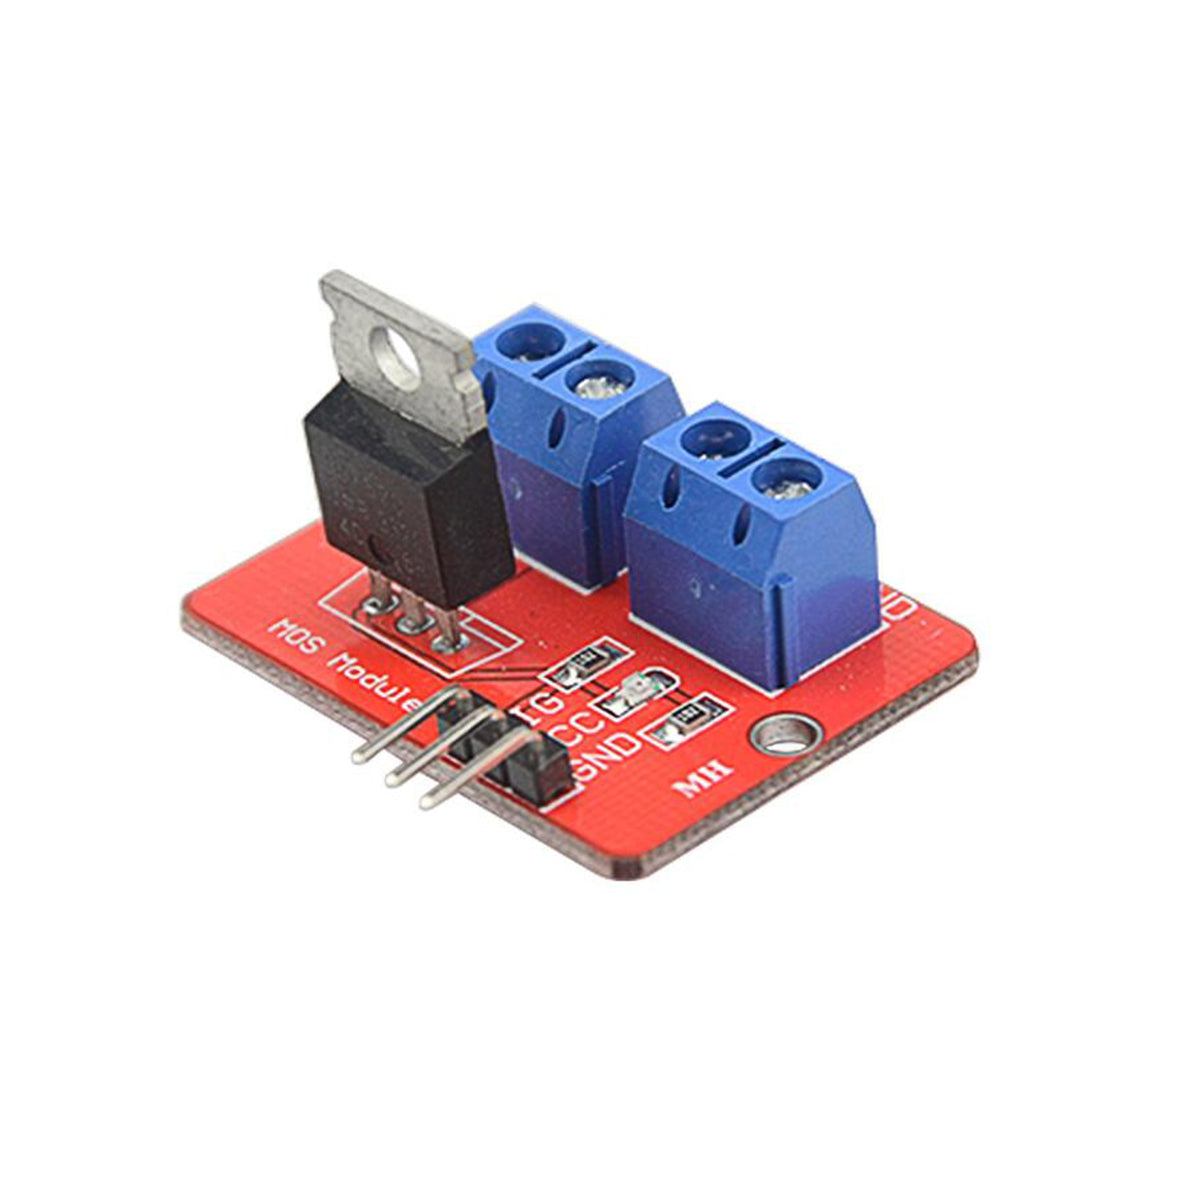 5Pcs IRF520 MOS FET driver module for arduino raspberry pi   vd